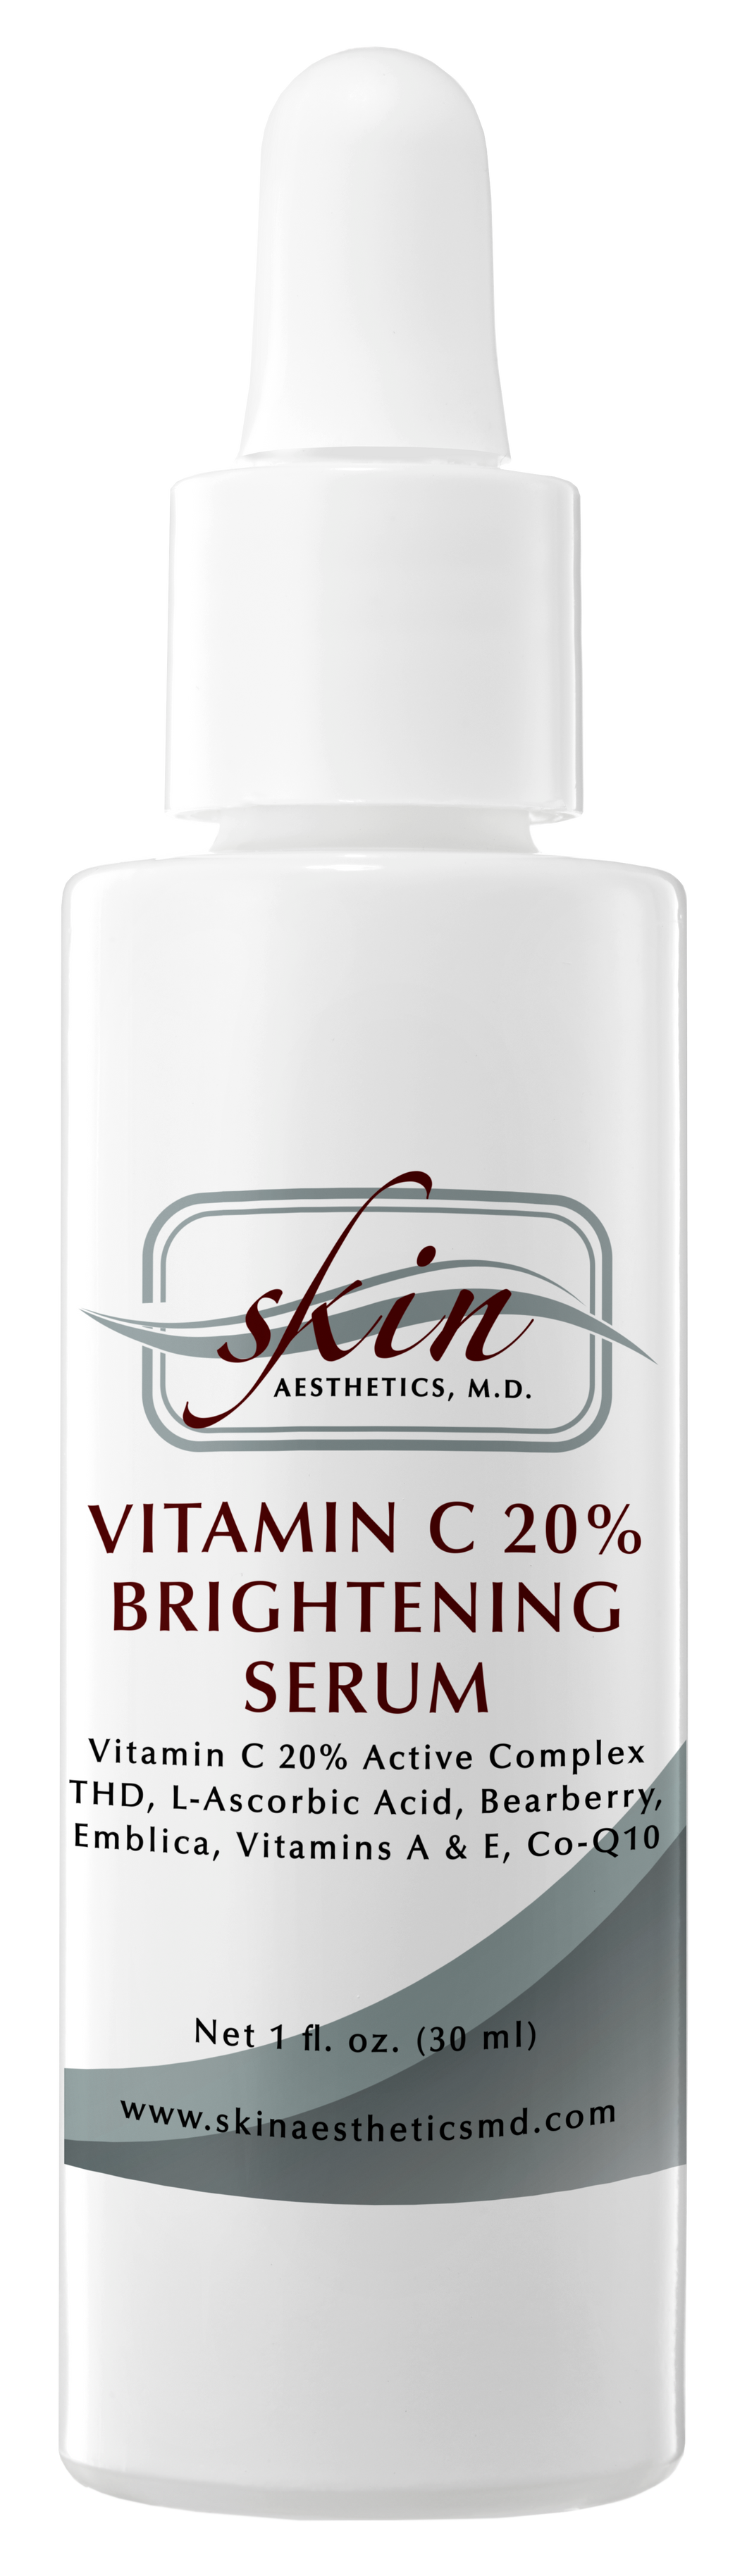 Vitamin C 20% Brightening Serum